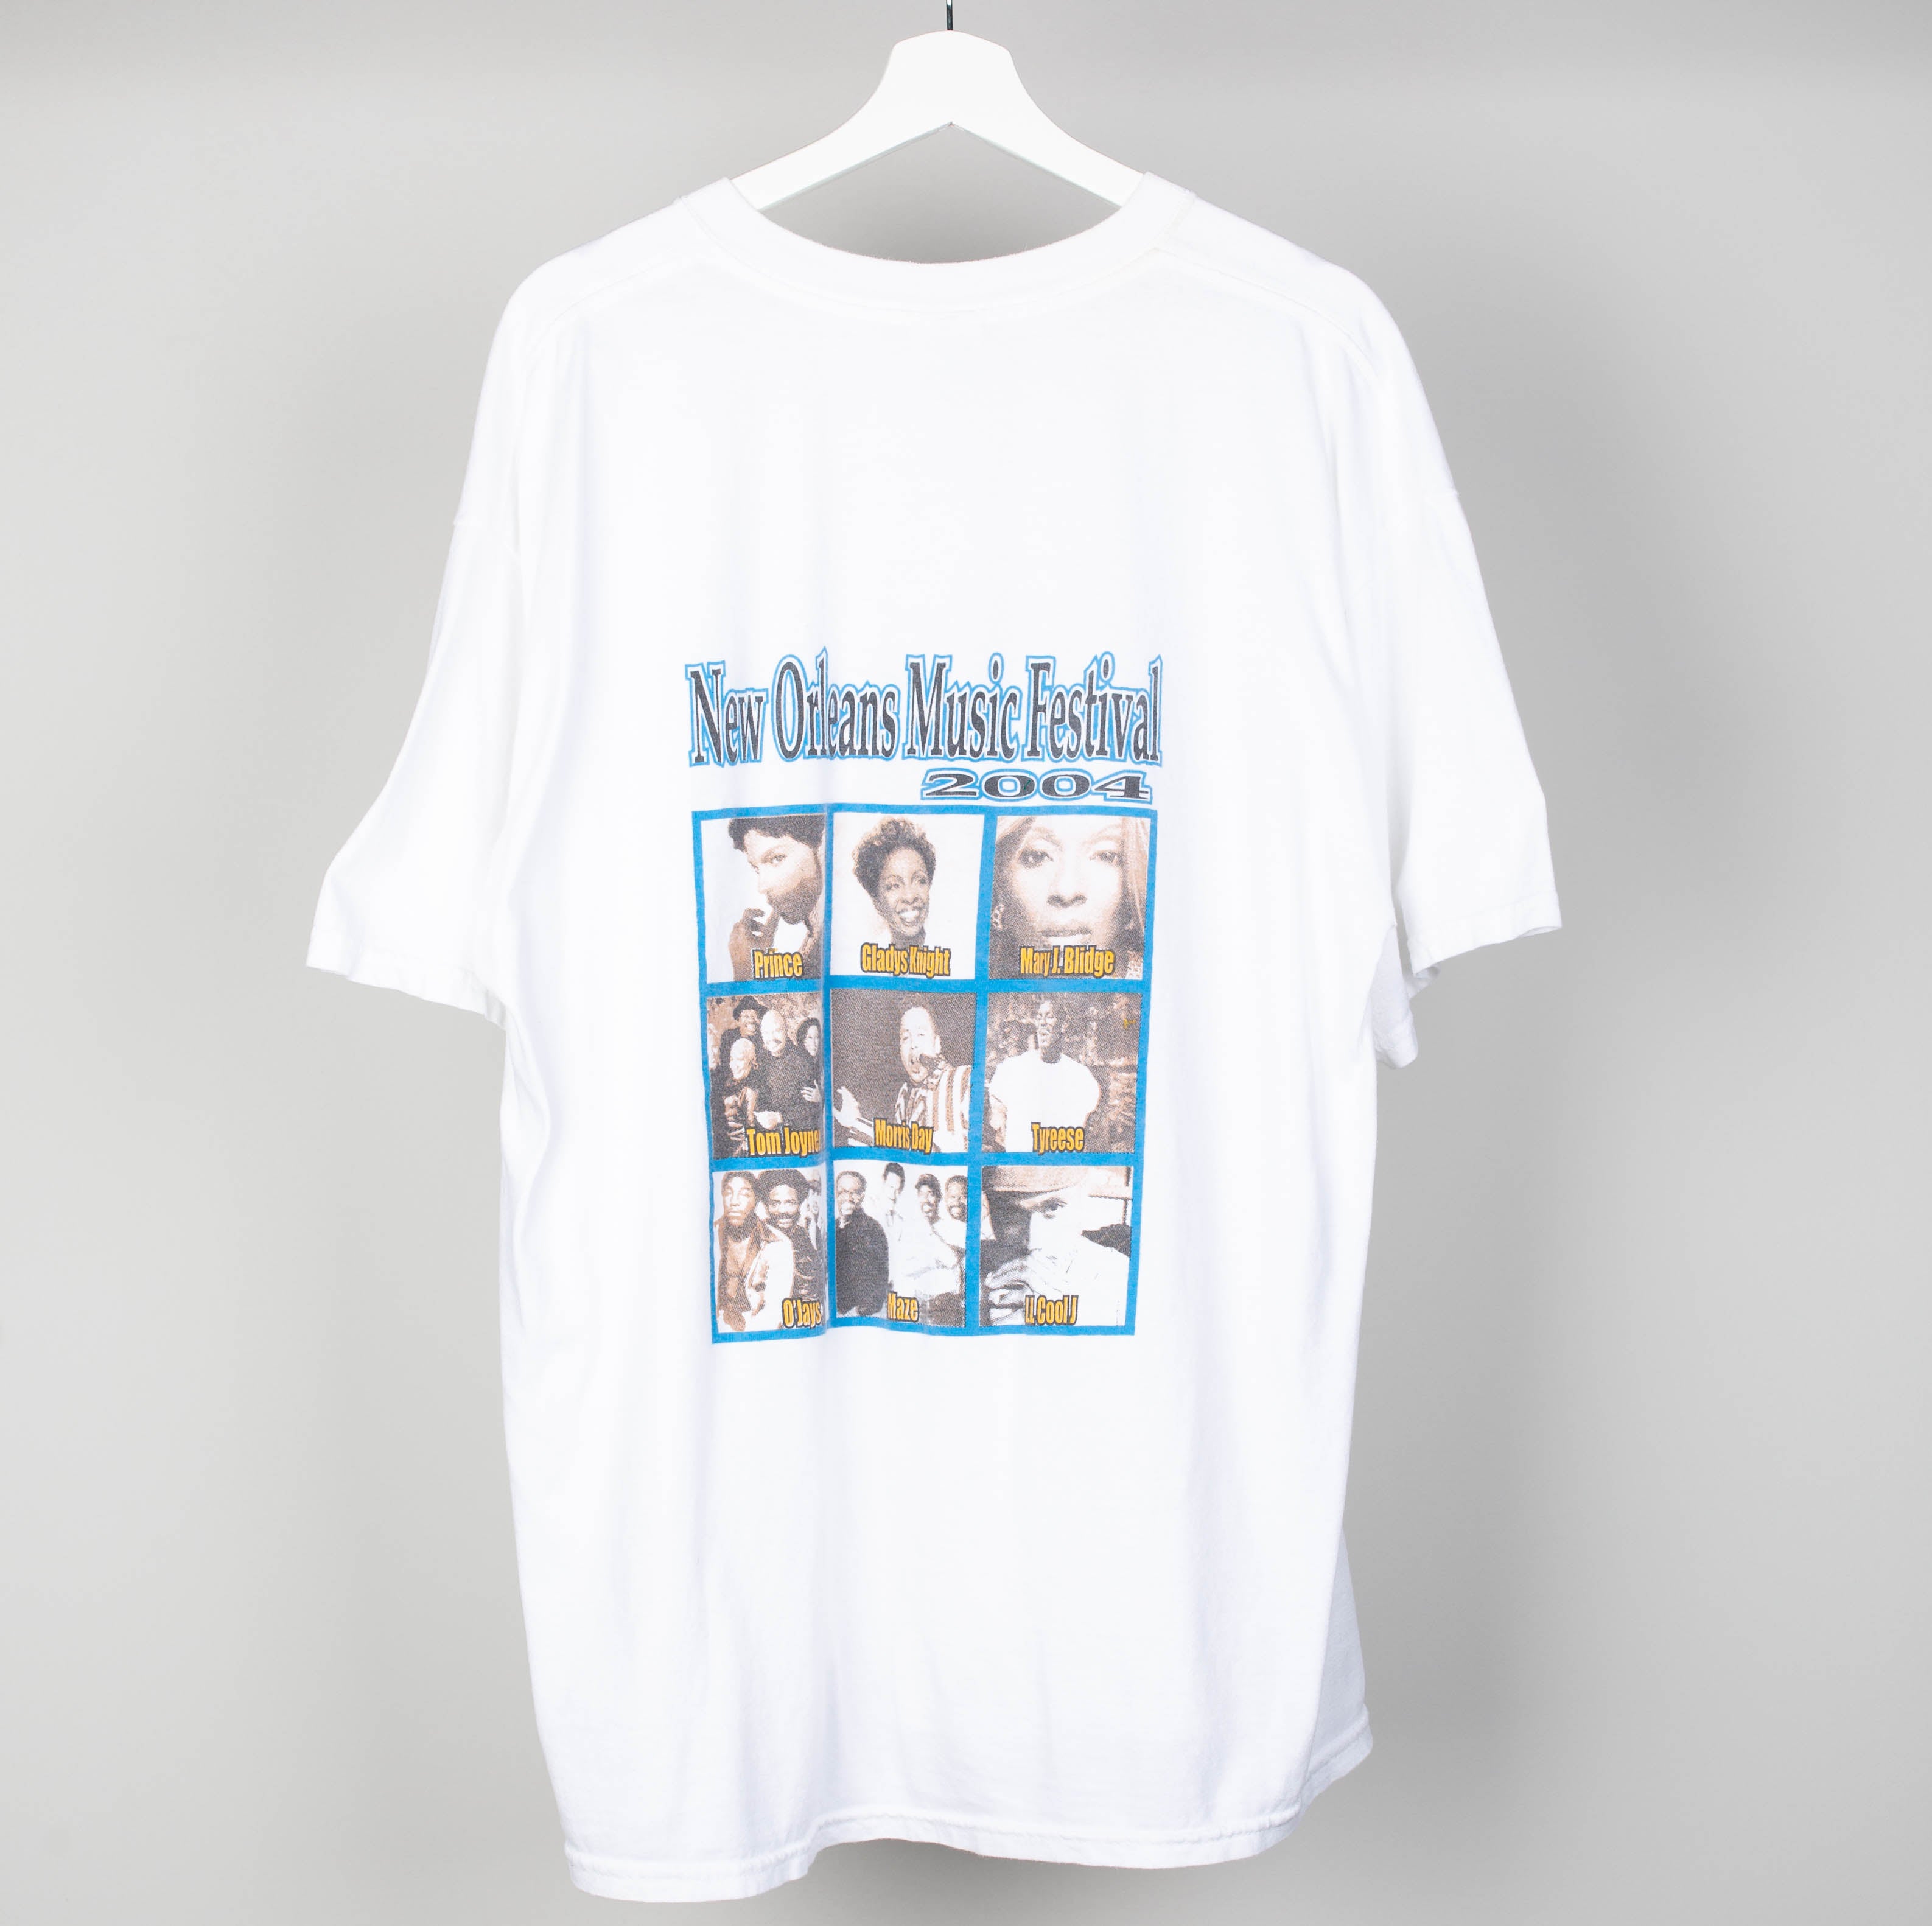 2004 New Orleans Music Festival T-Shirt Size XL